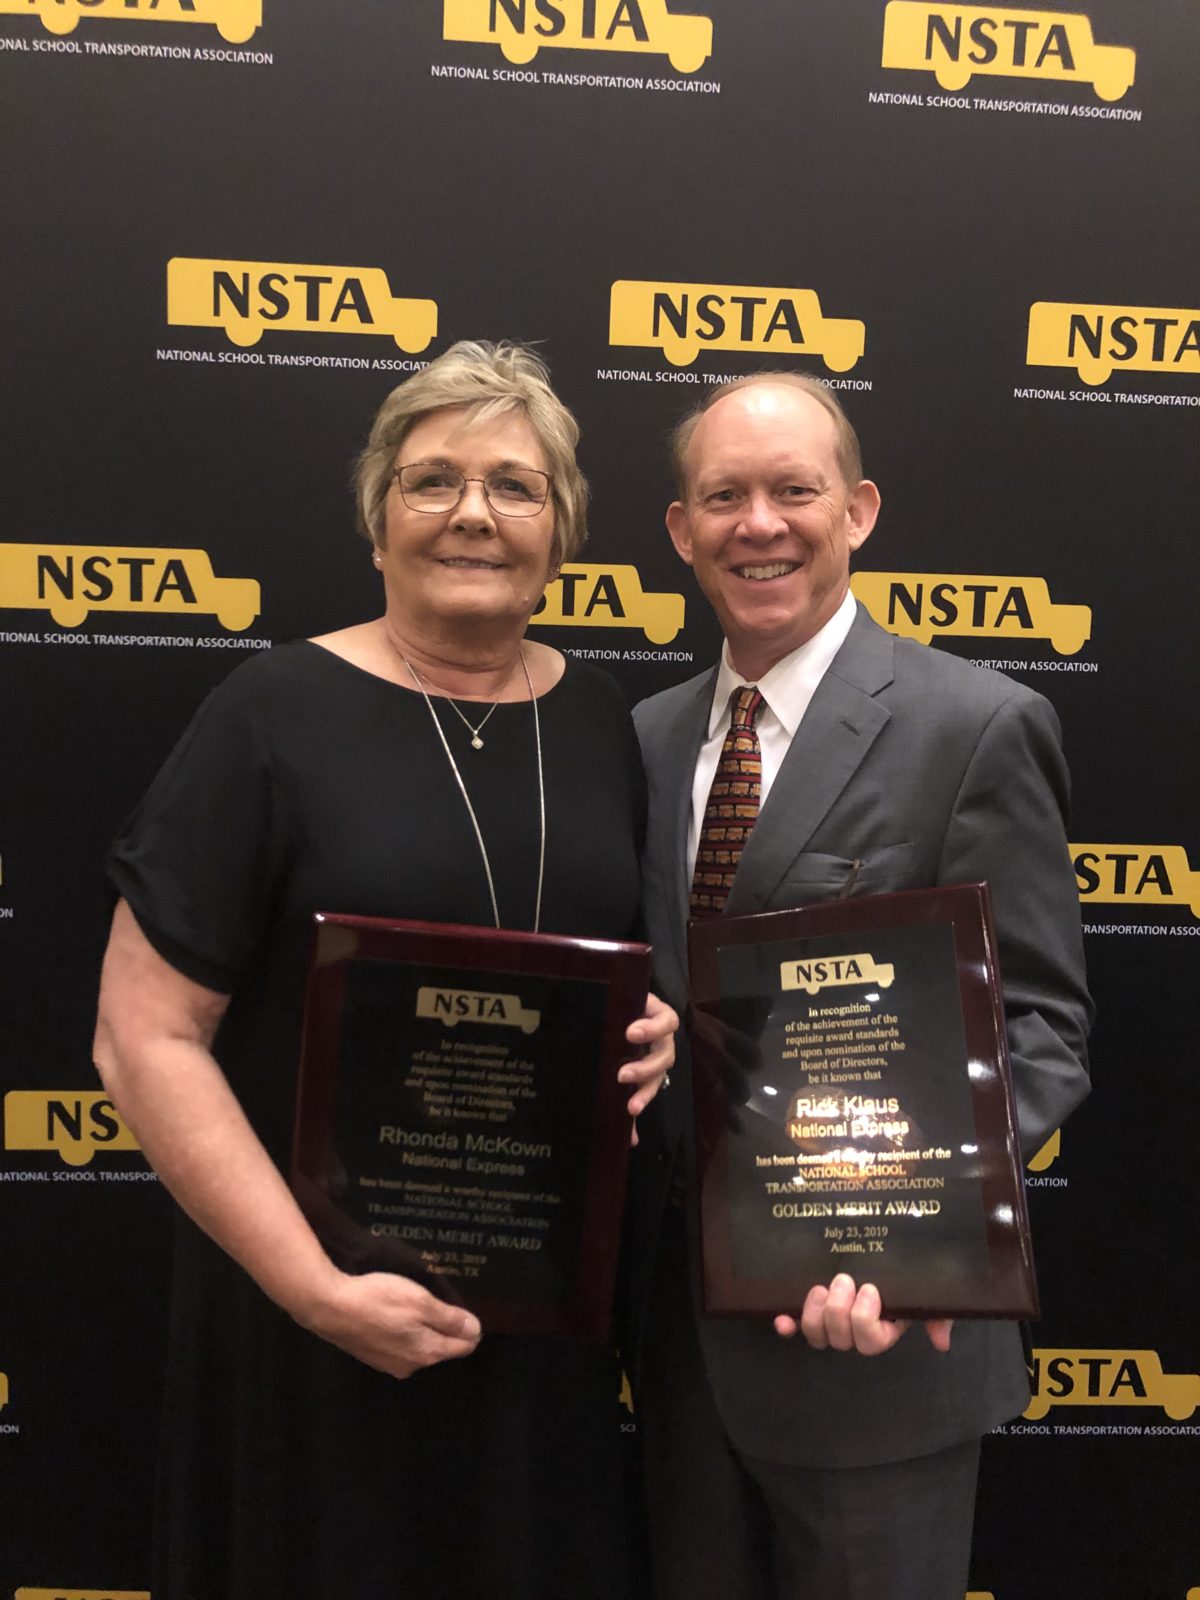 Rhonda McKown and Rick Klaus Awarded the Golden Merit Award  by the National Student Transportation Association